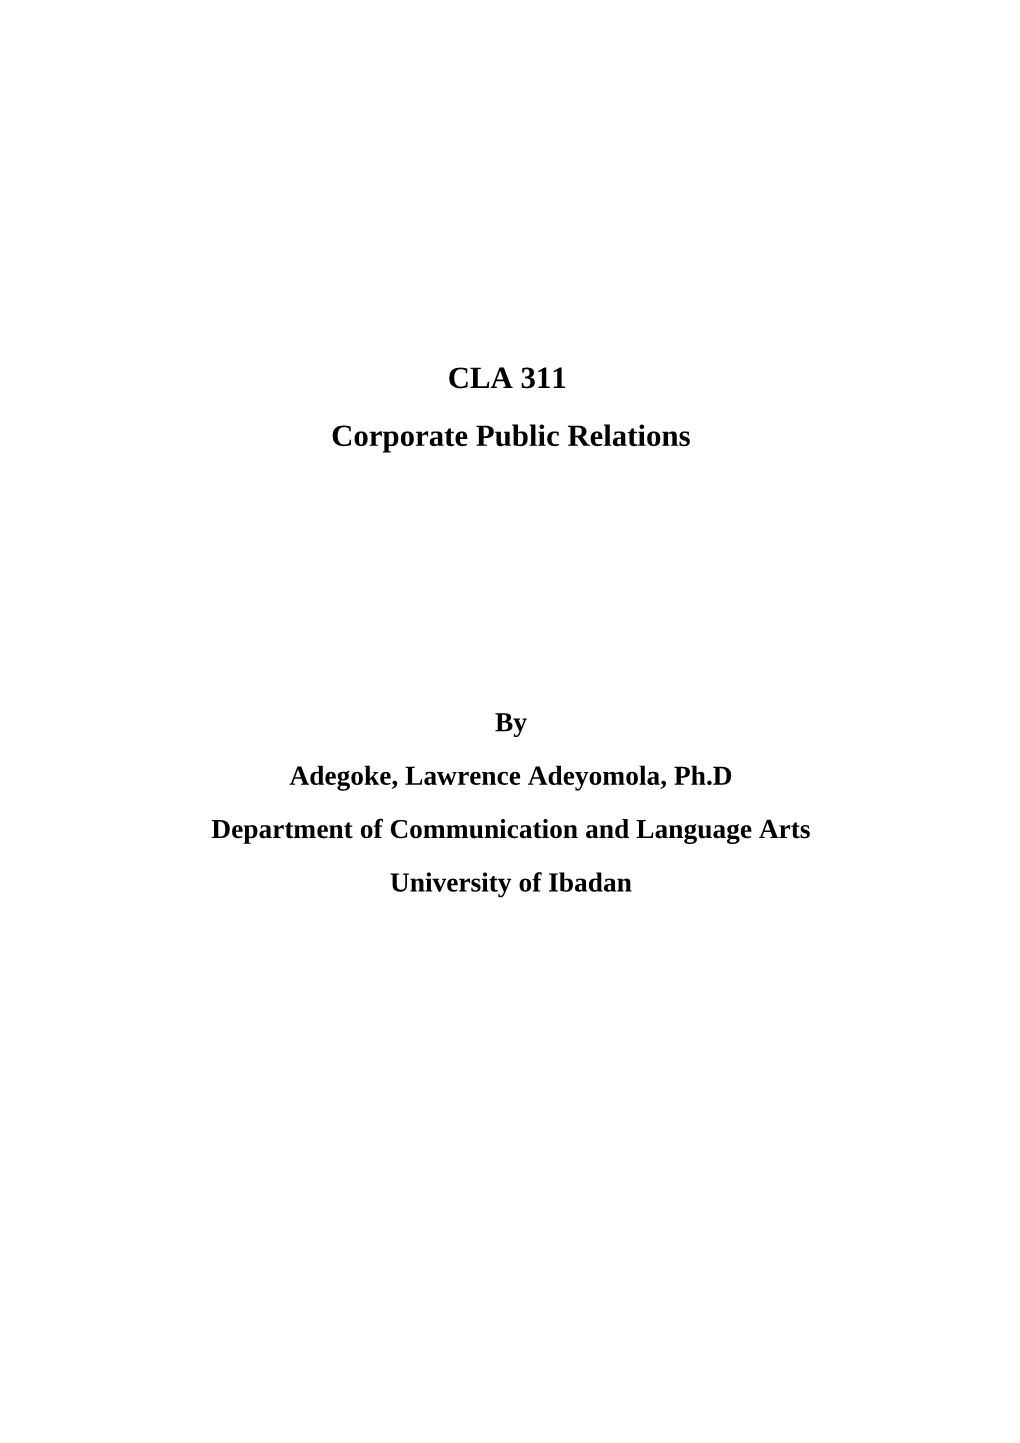 CLA 311 Corporate Public Relations